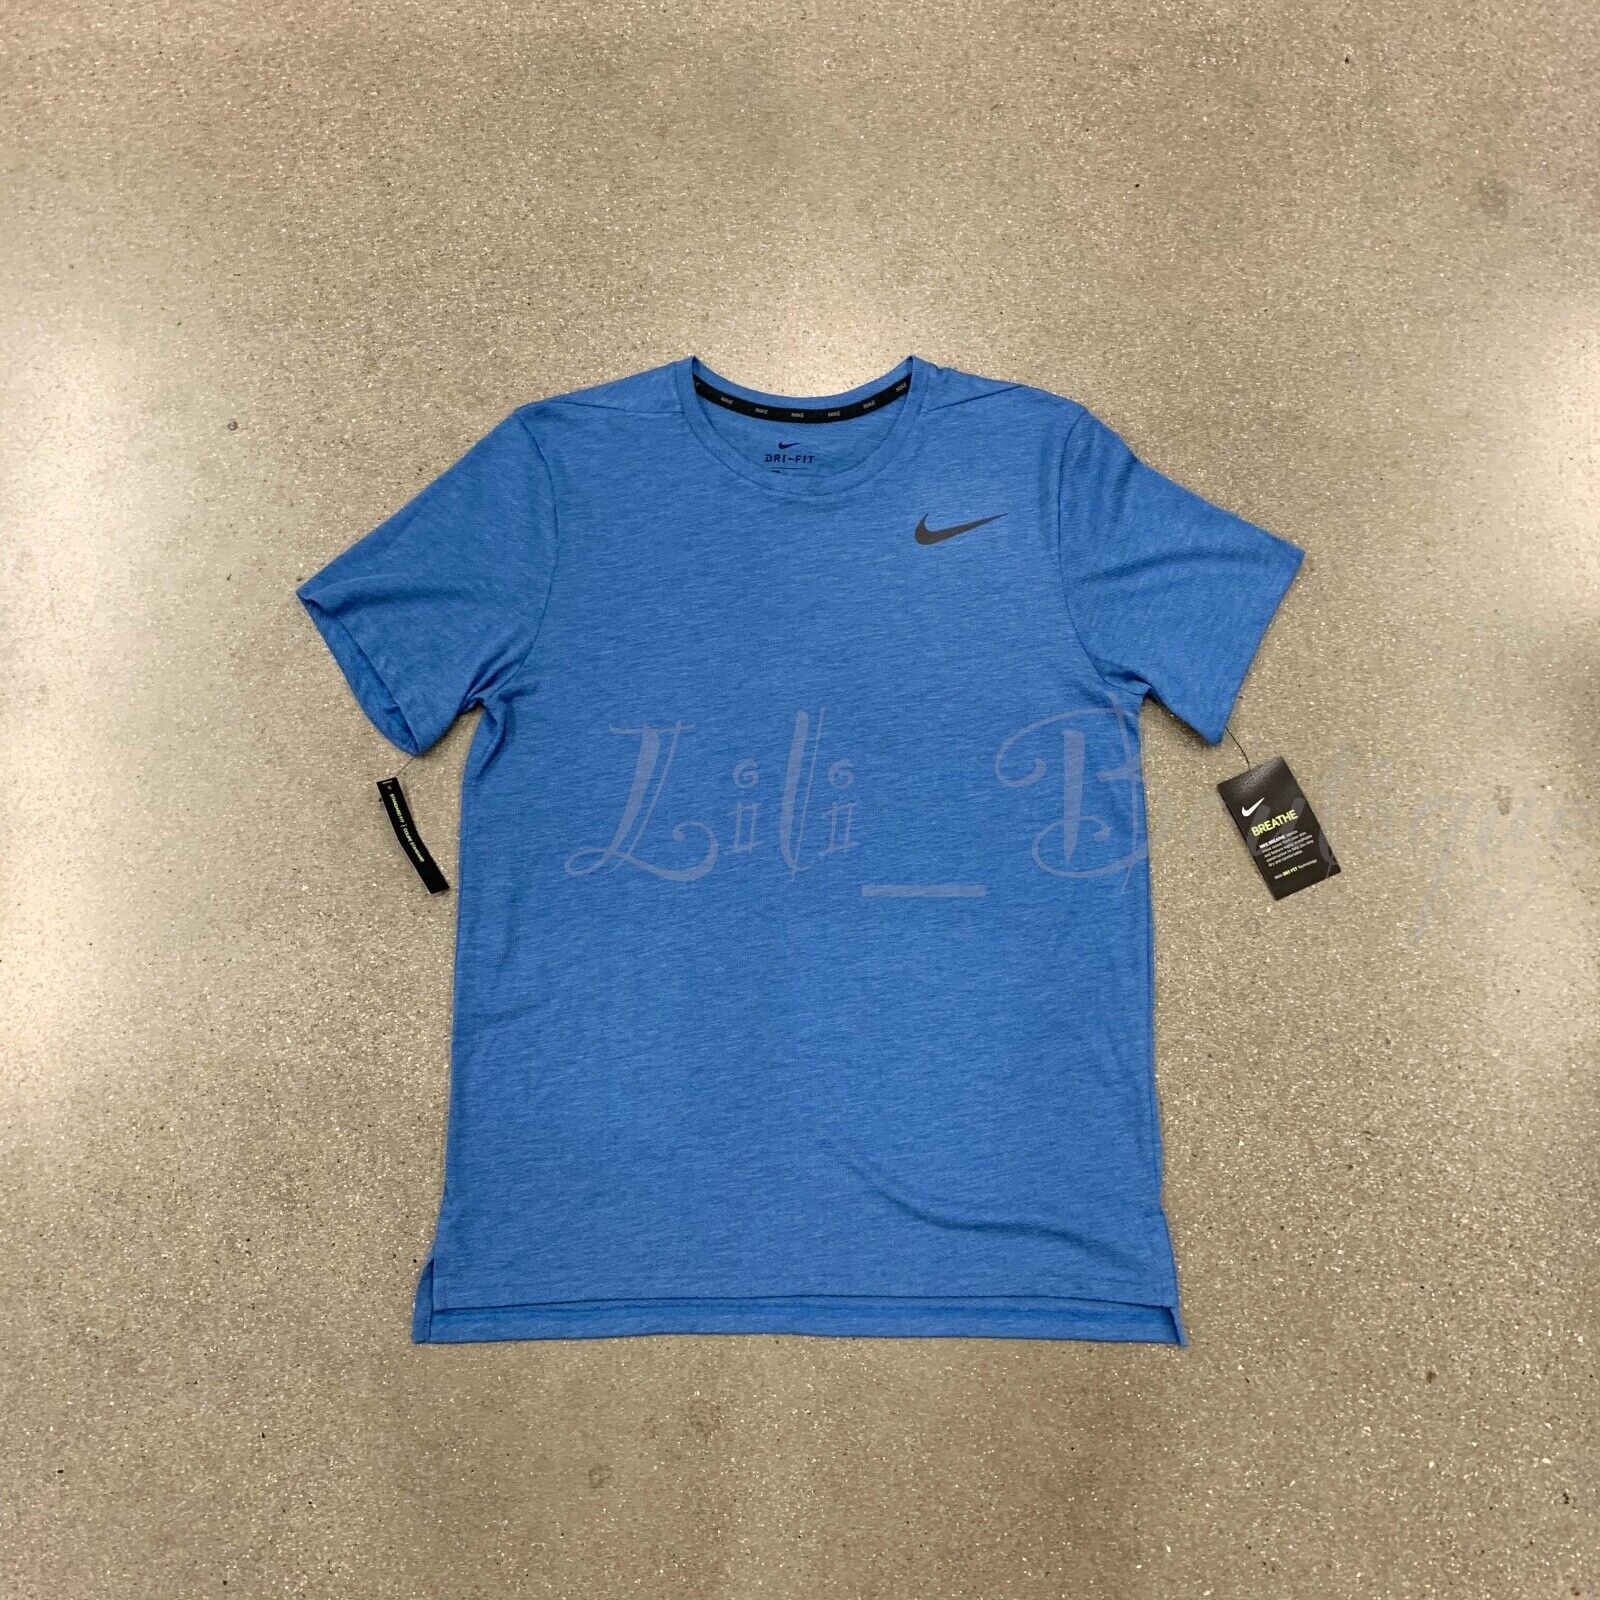 NWT Nike Breathe AJ8002-456 Men's Dri-FIT and 50 similar items